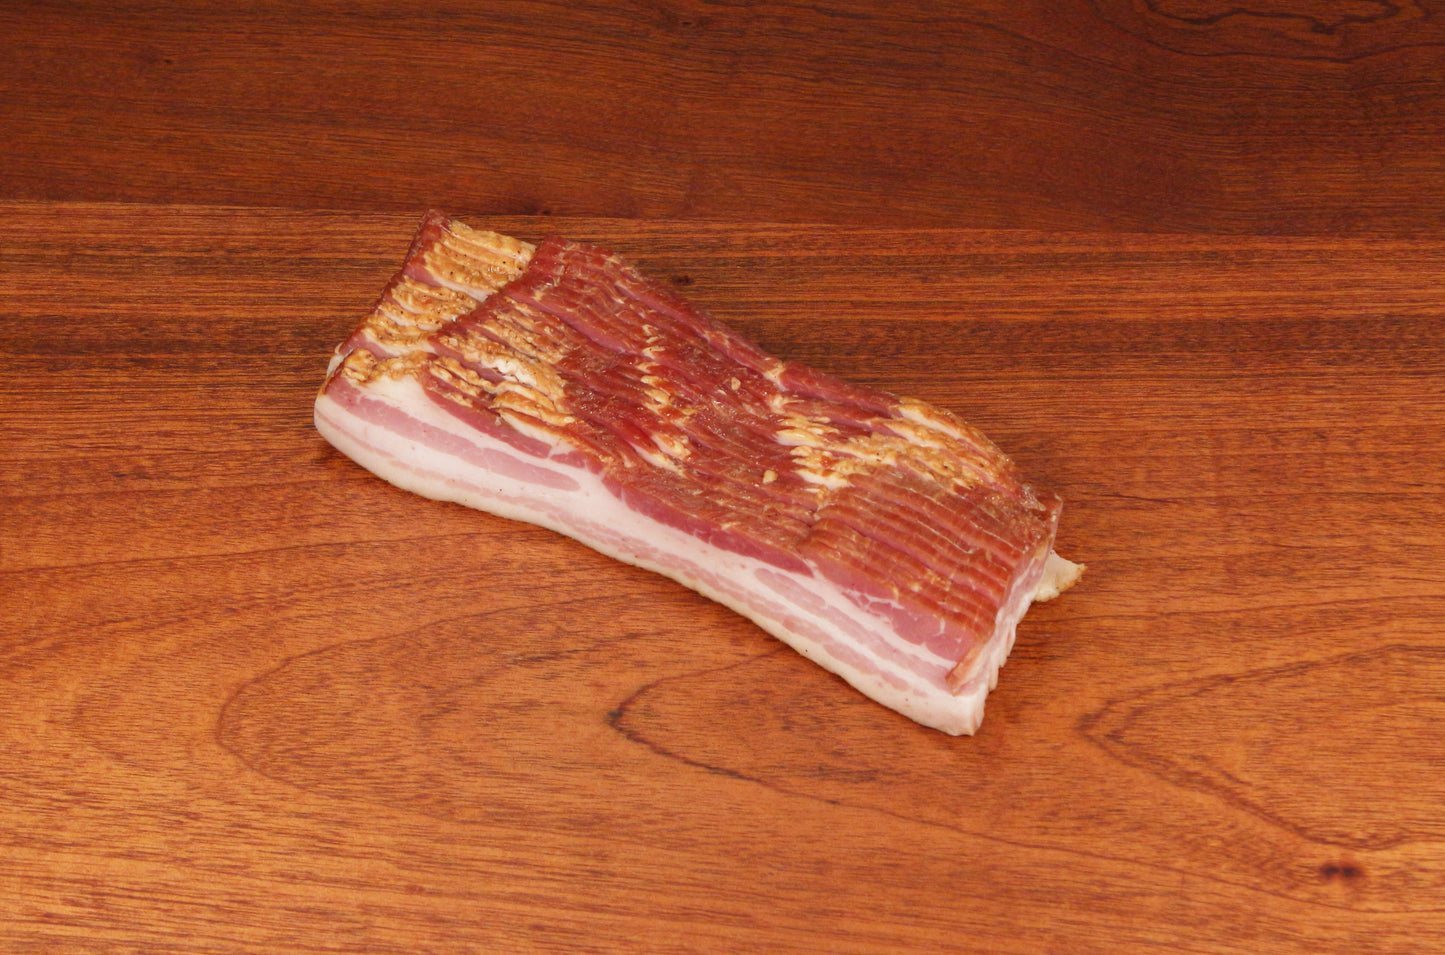 AppleWood Smoked Pork Bacon